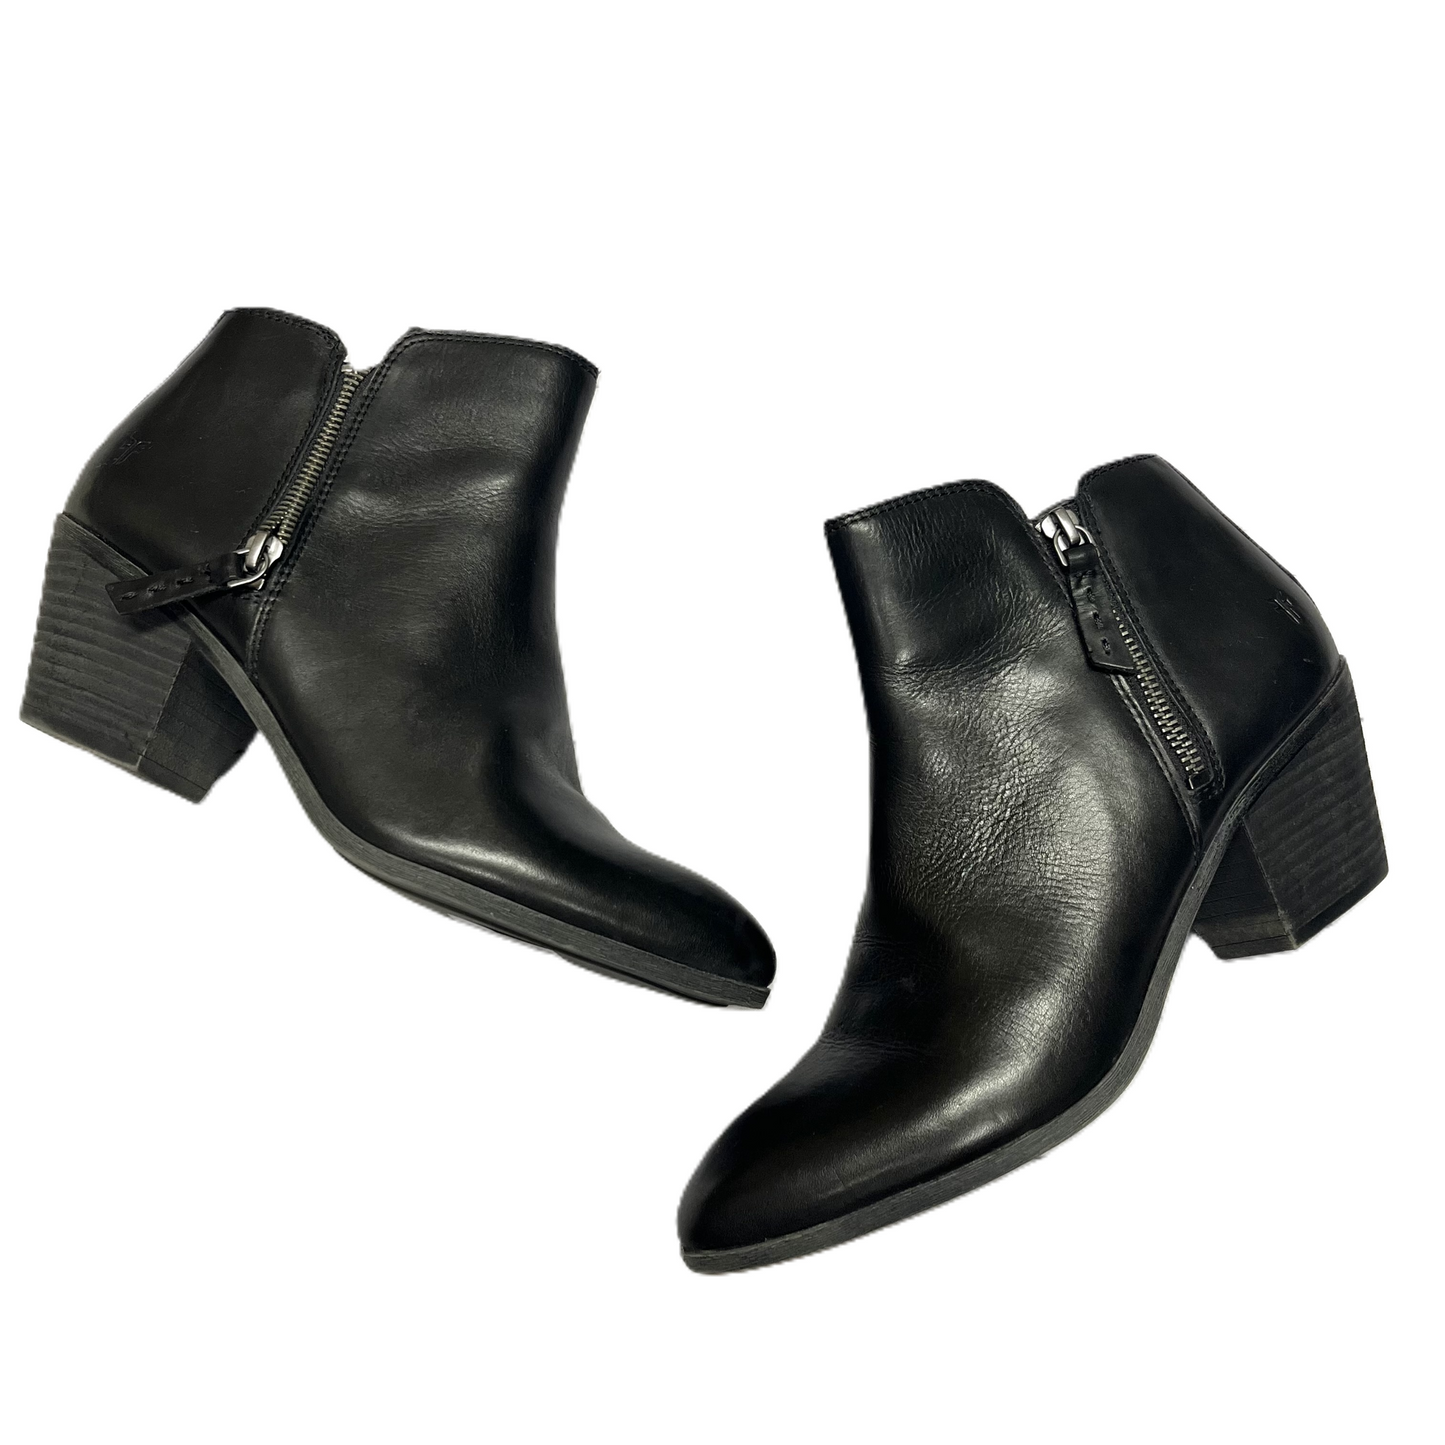 Black Boots Designer By Frye, Size: 9